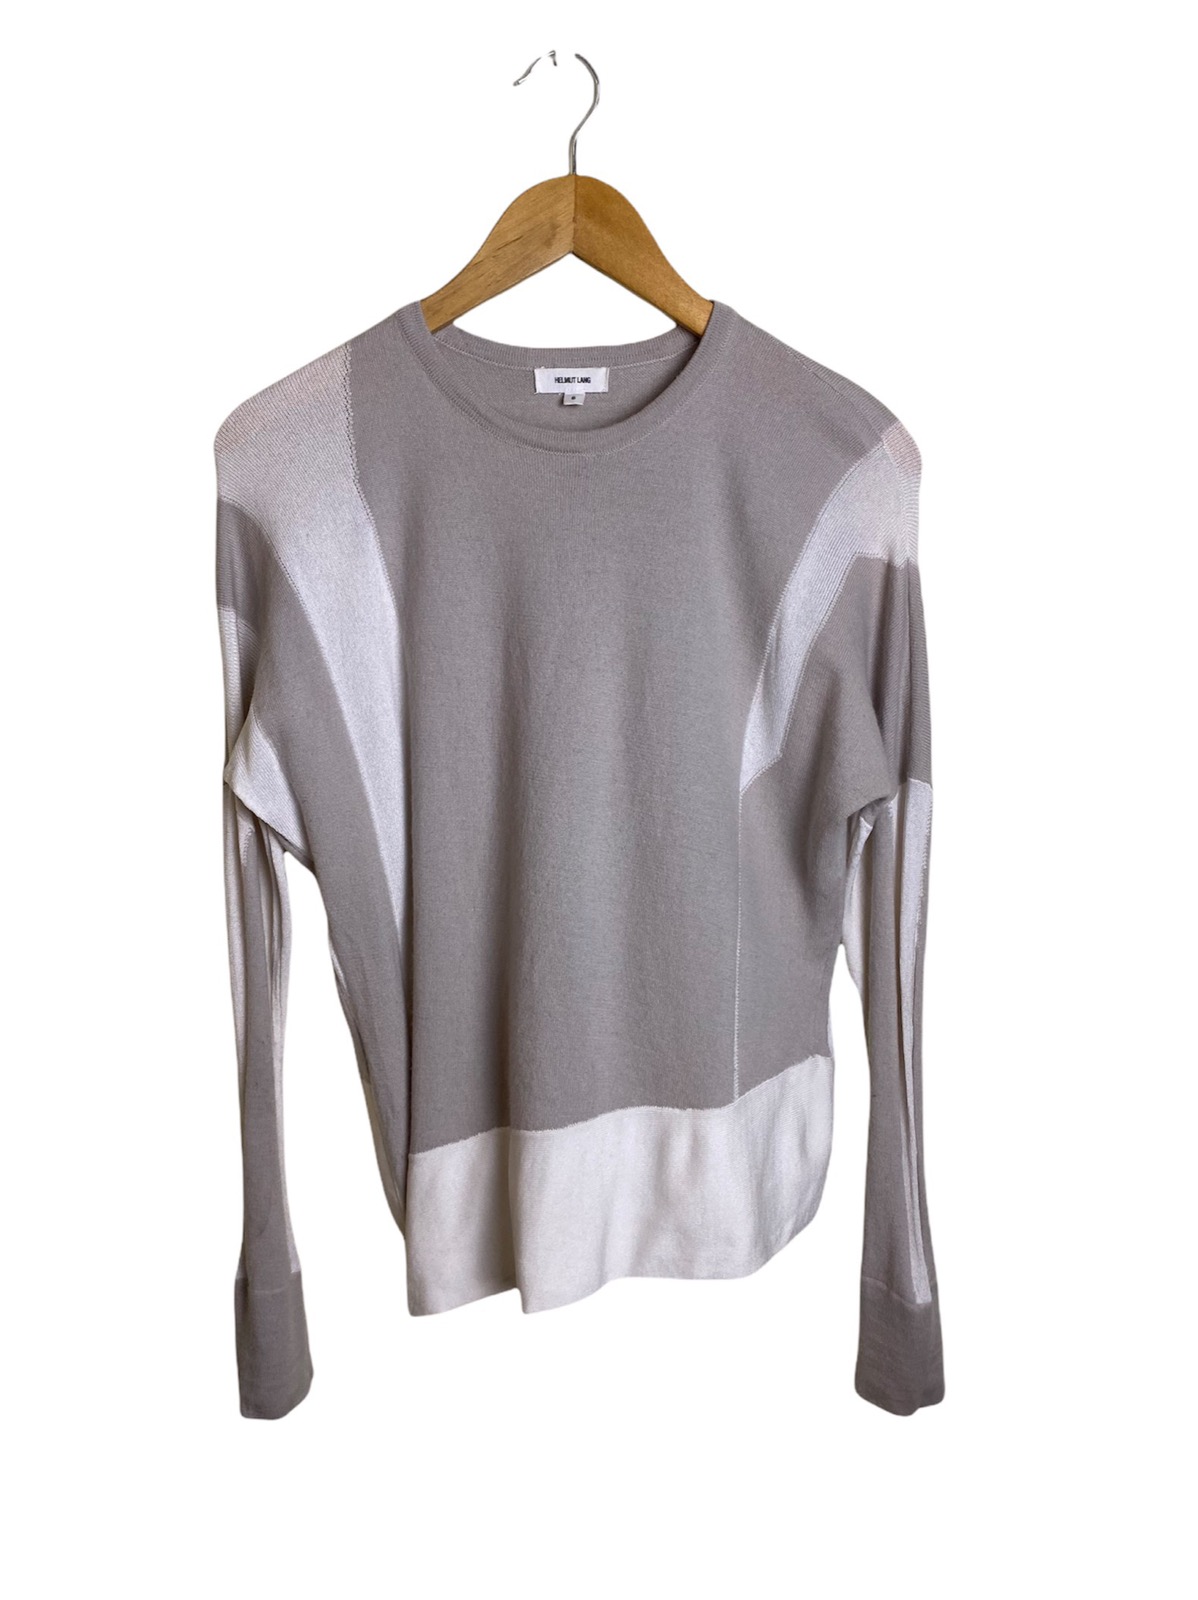 Helmut Lang Sweater Alpaca Viscose Blend Fall 2013 - 1